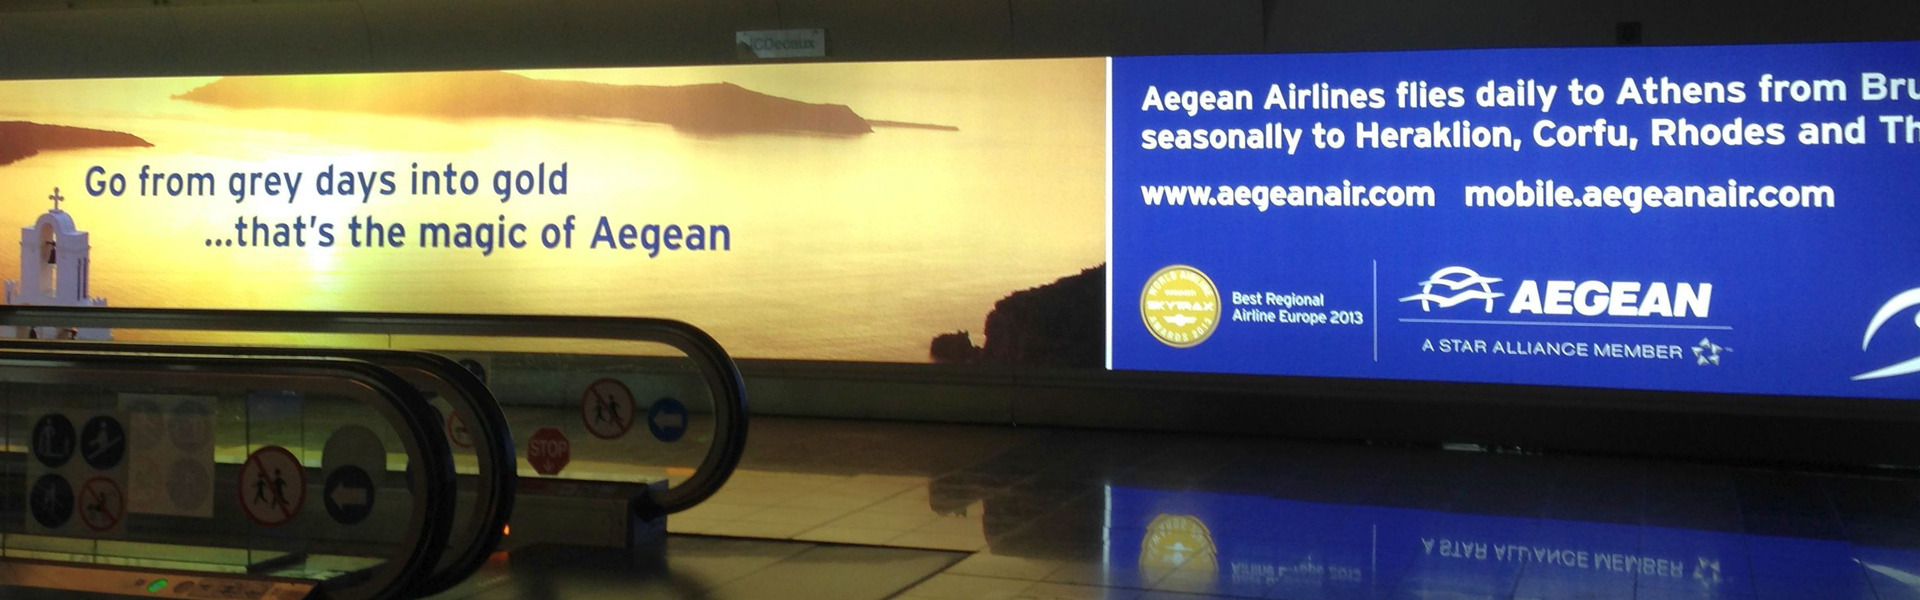 01_Aegean-airlines-advert_WEB-1920x600